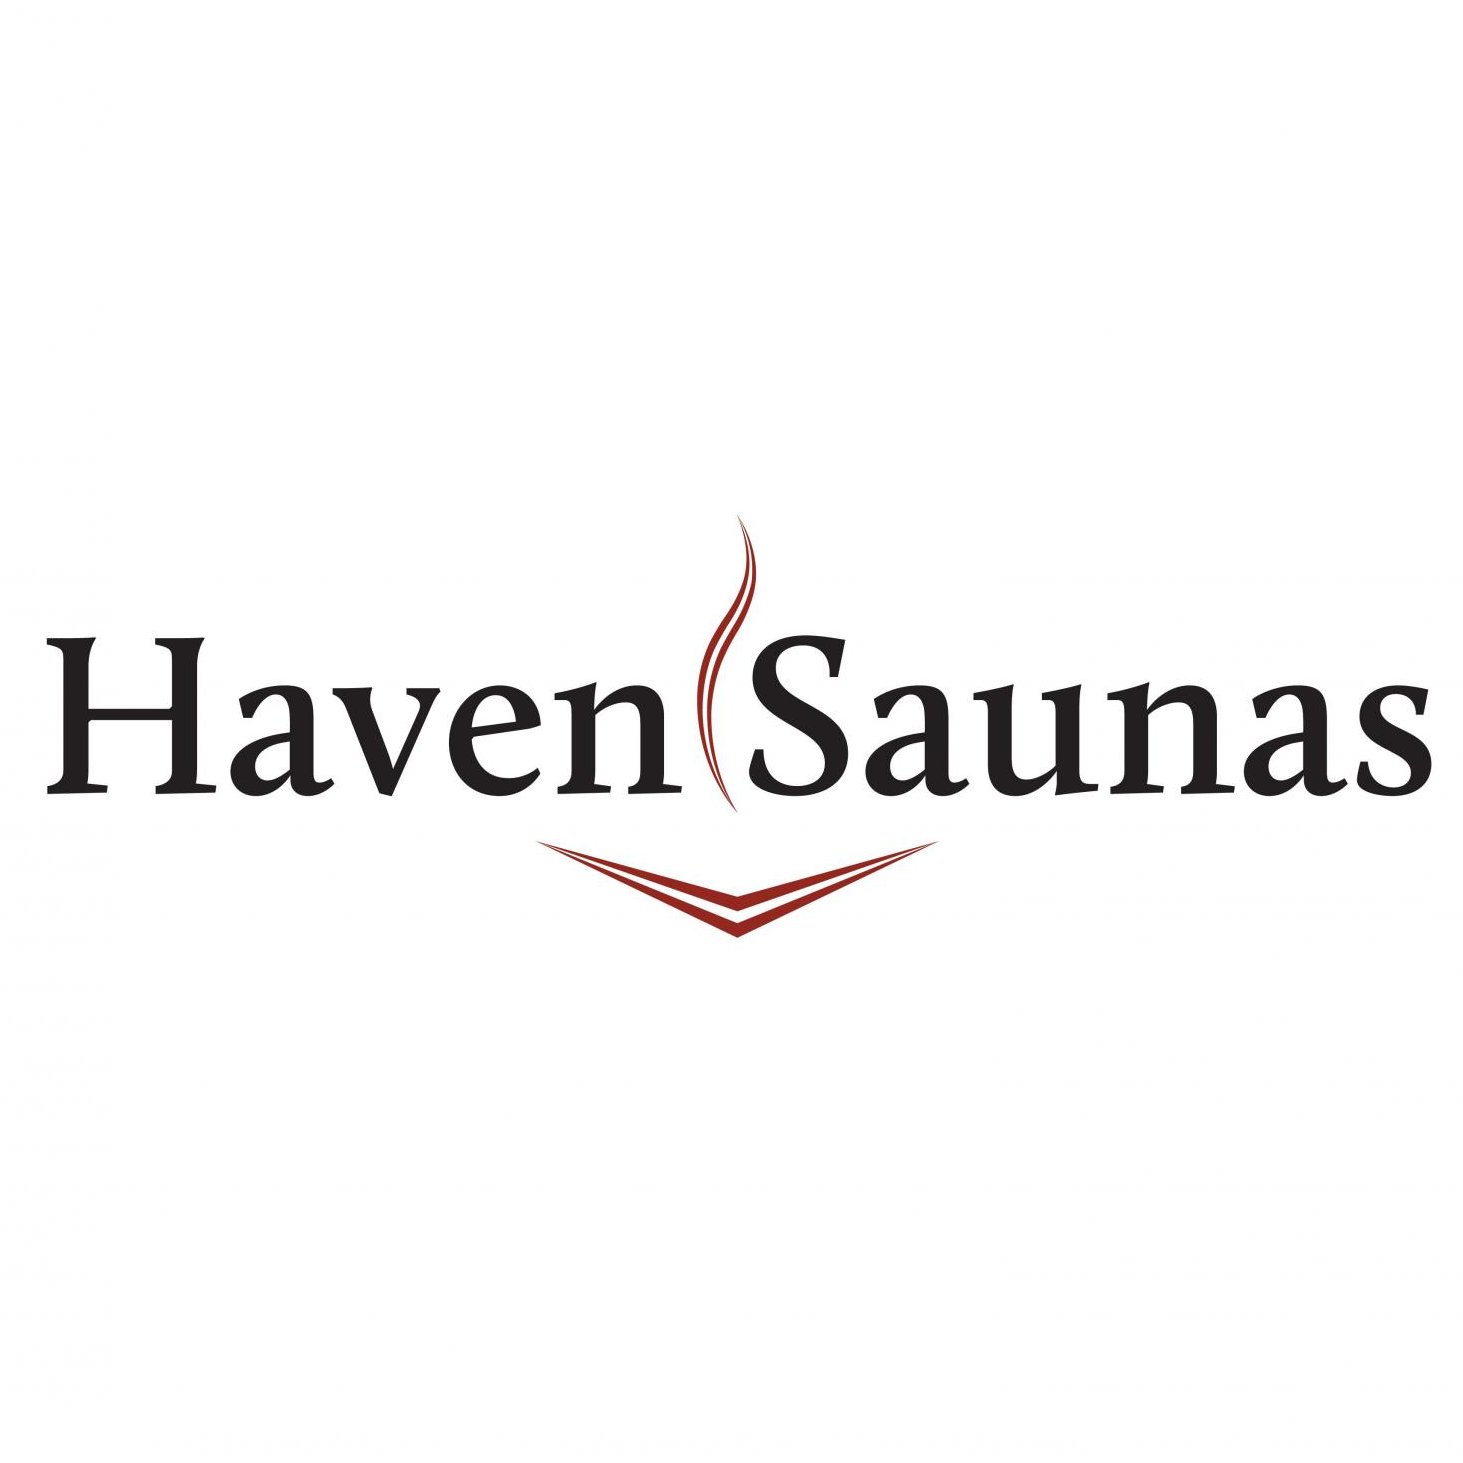 Electric sauna heater manufacturer. Contact us: havensaunas@aubren.com